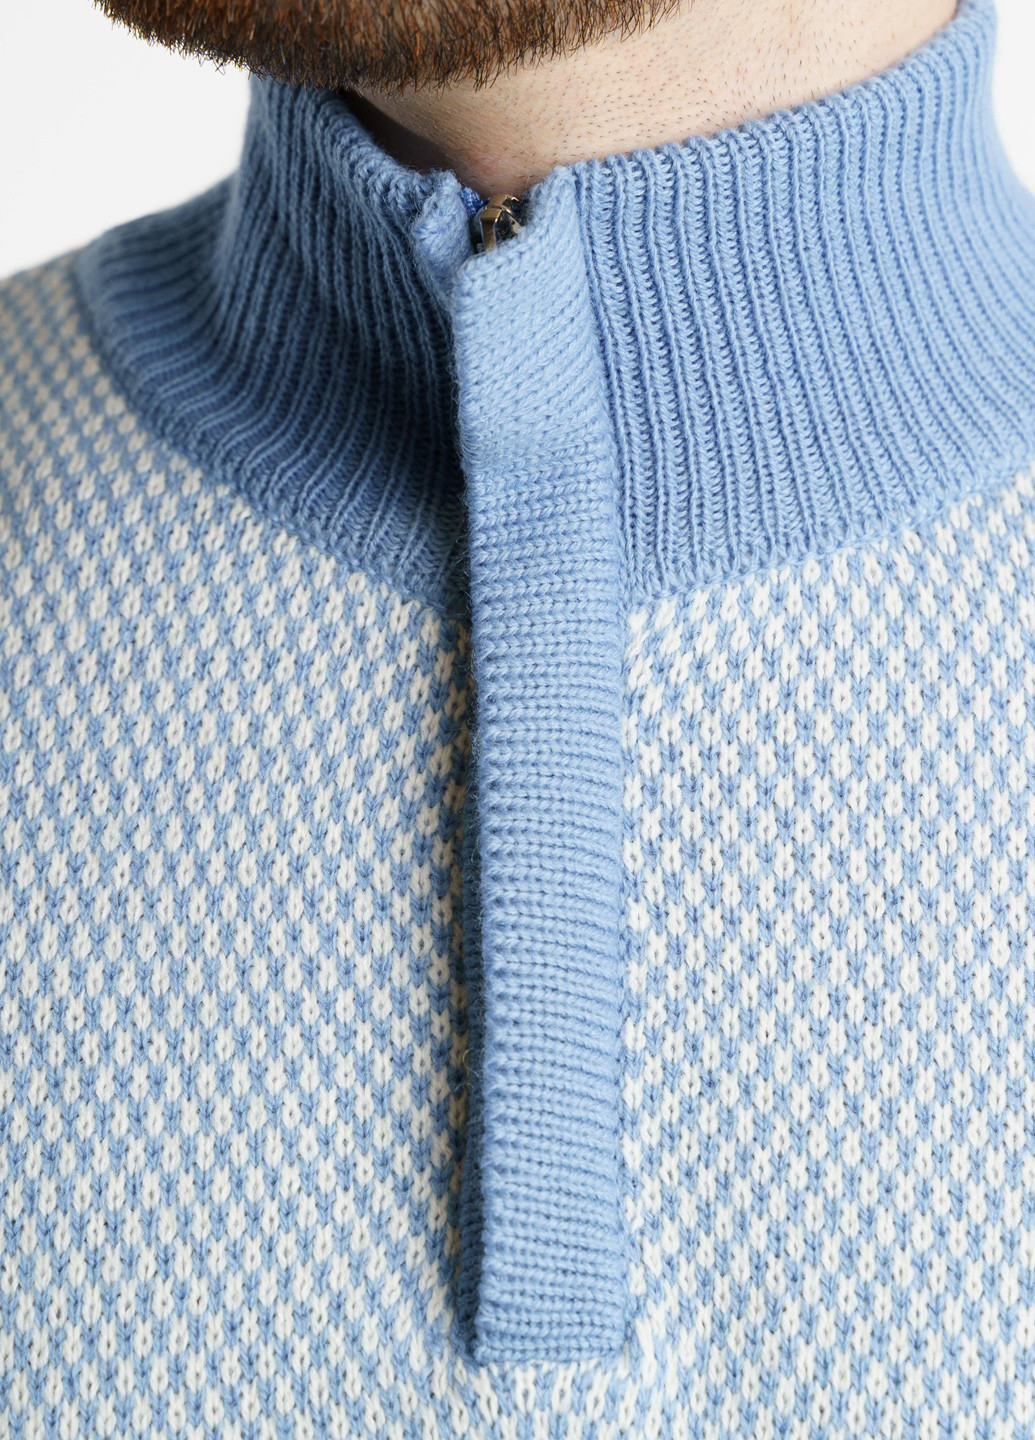 Голубой зимний свитер мужской Arber Zipper-neck 7 N-AVT-90